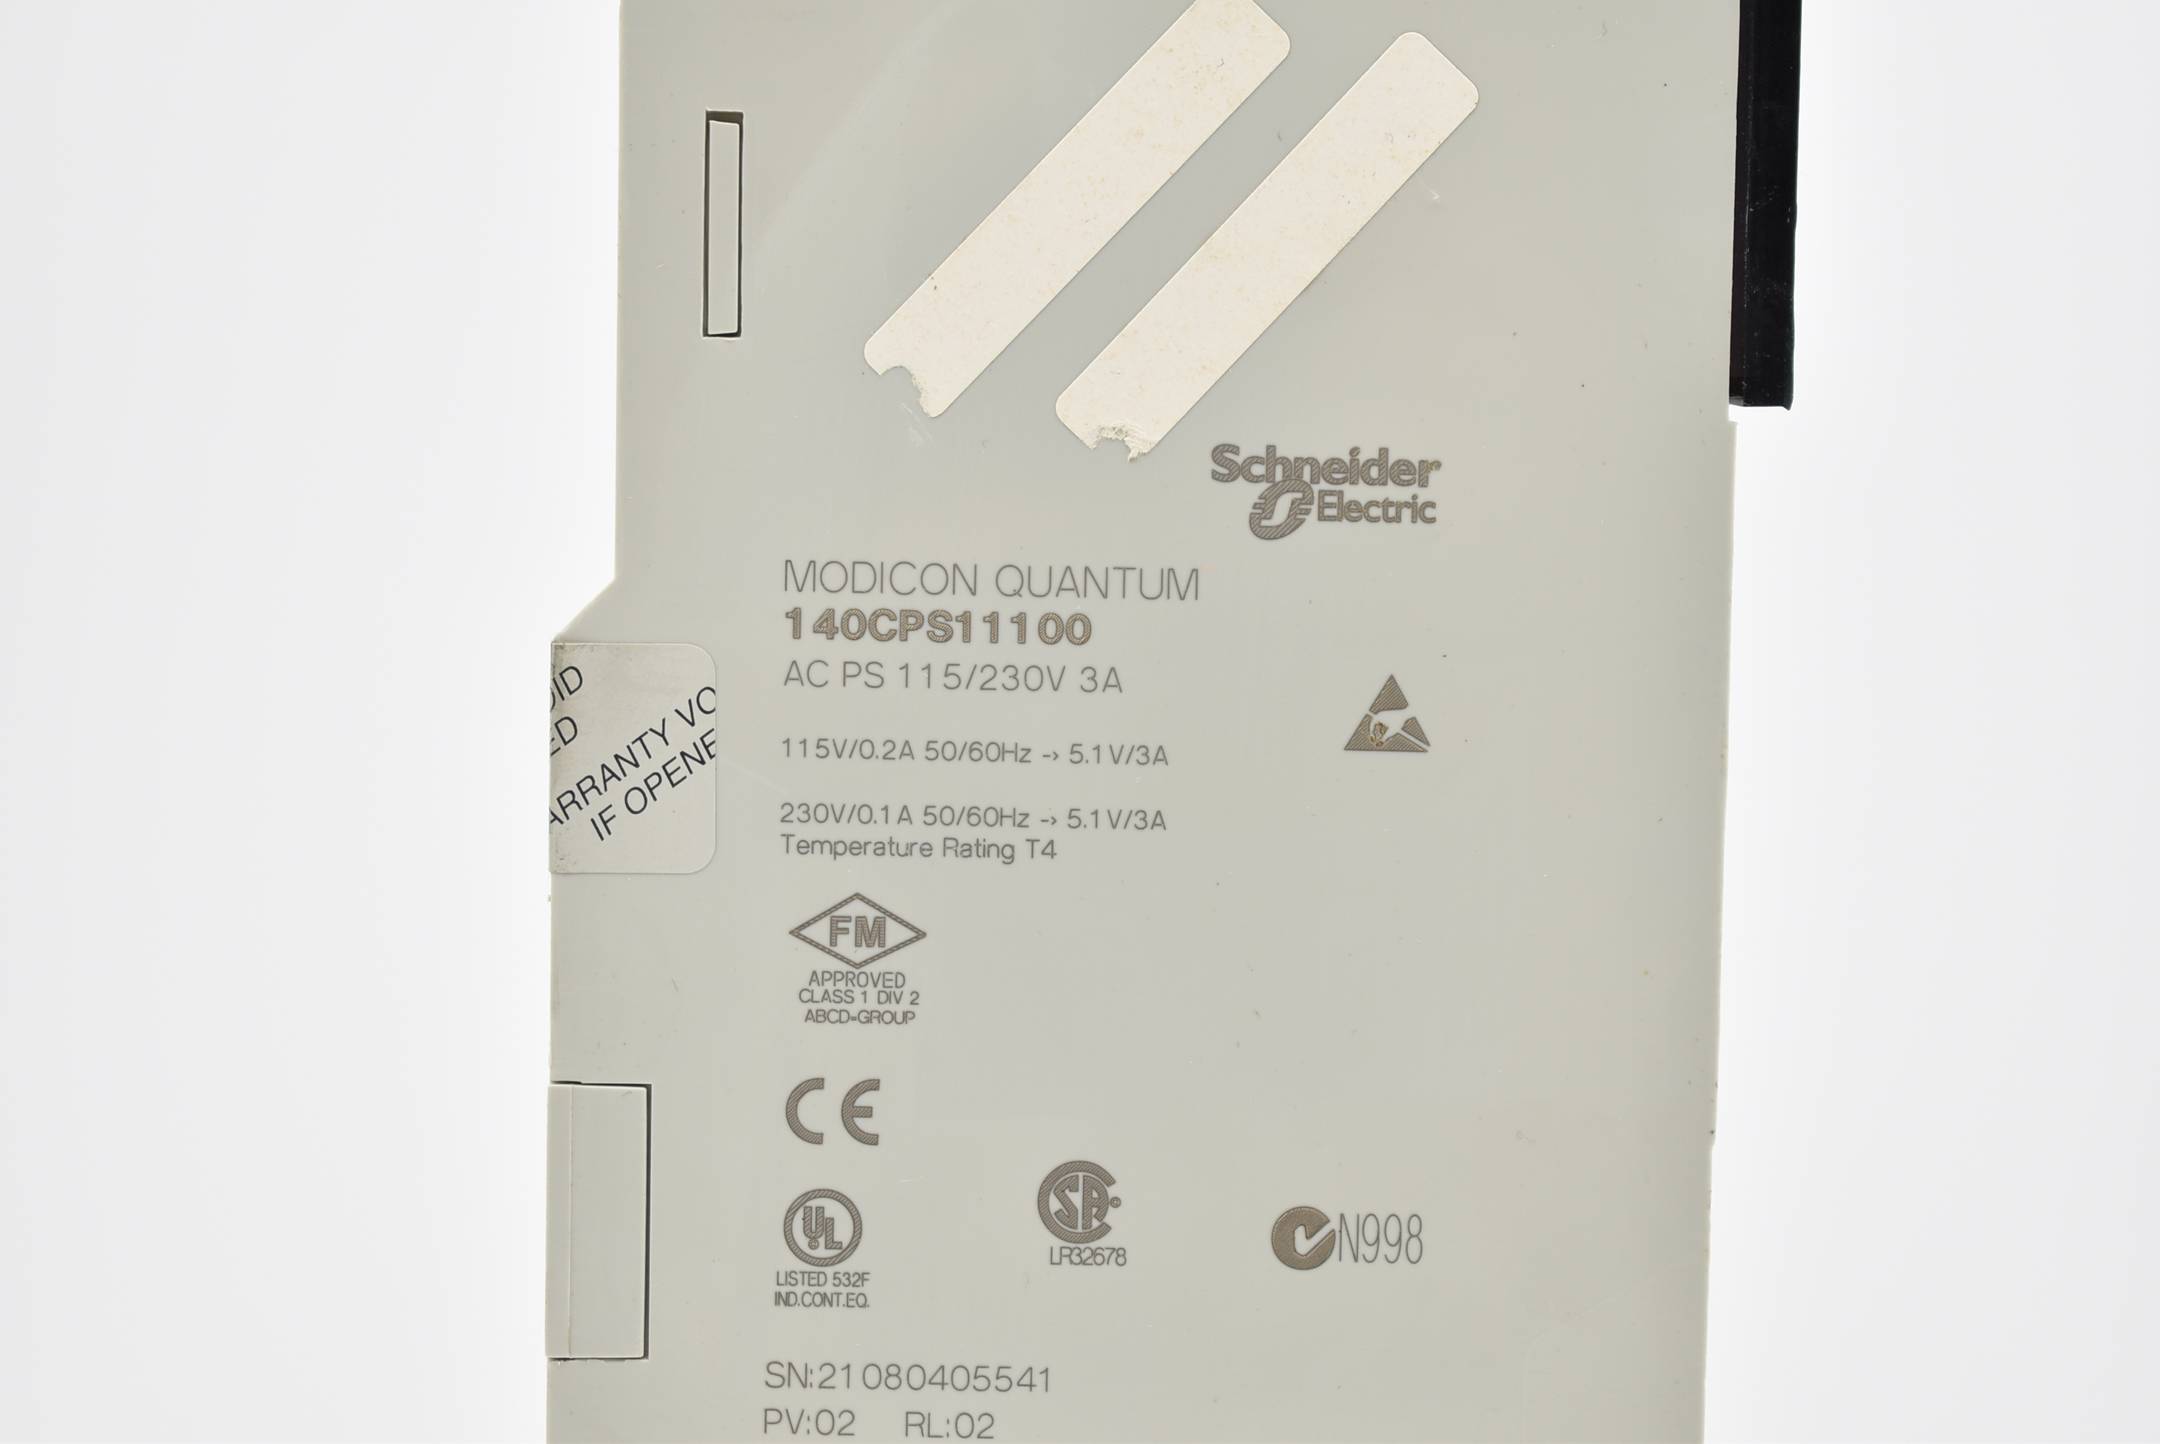 Schneider Electric Modicon Quantum 140CPS11100 ( 140 CPS 111 00 )